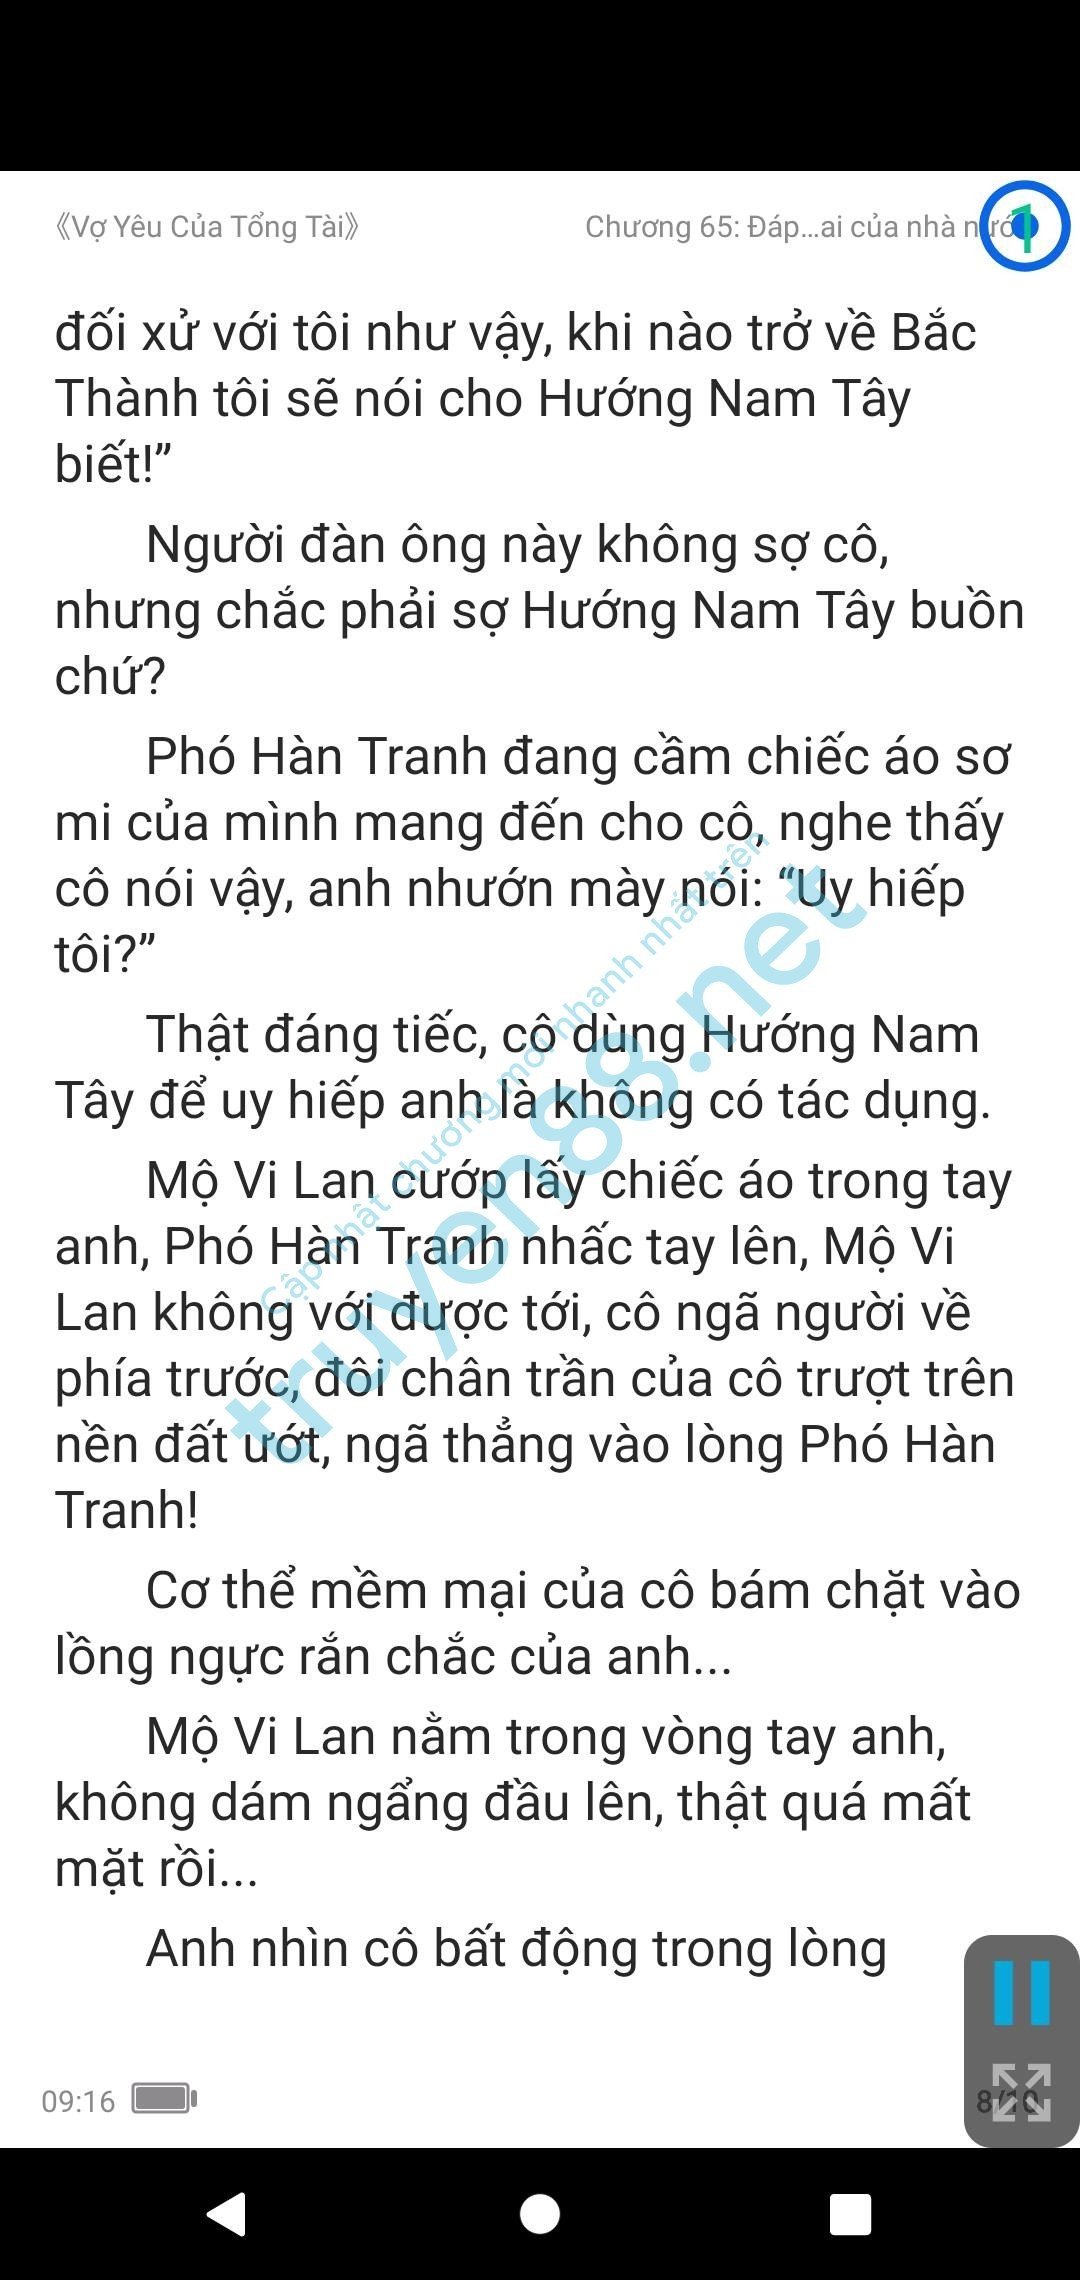 vo-yeu-cua-tong-tai-mo-vi-lan--pho-han-tranh-65-0